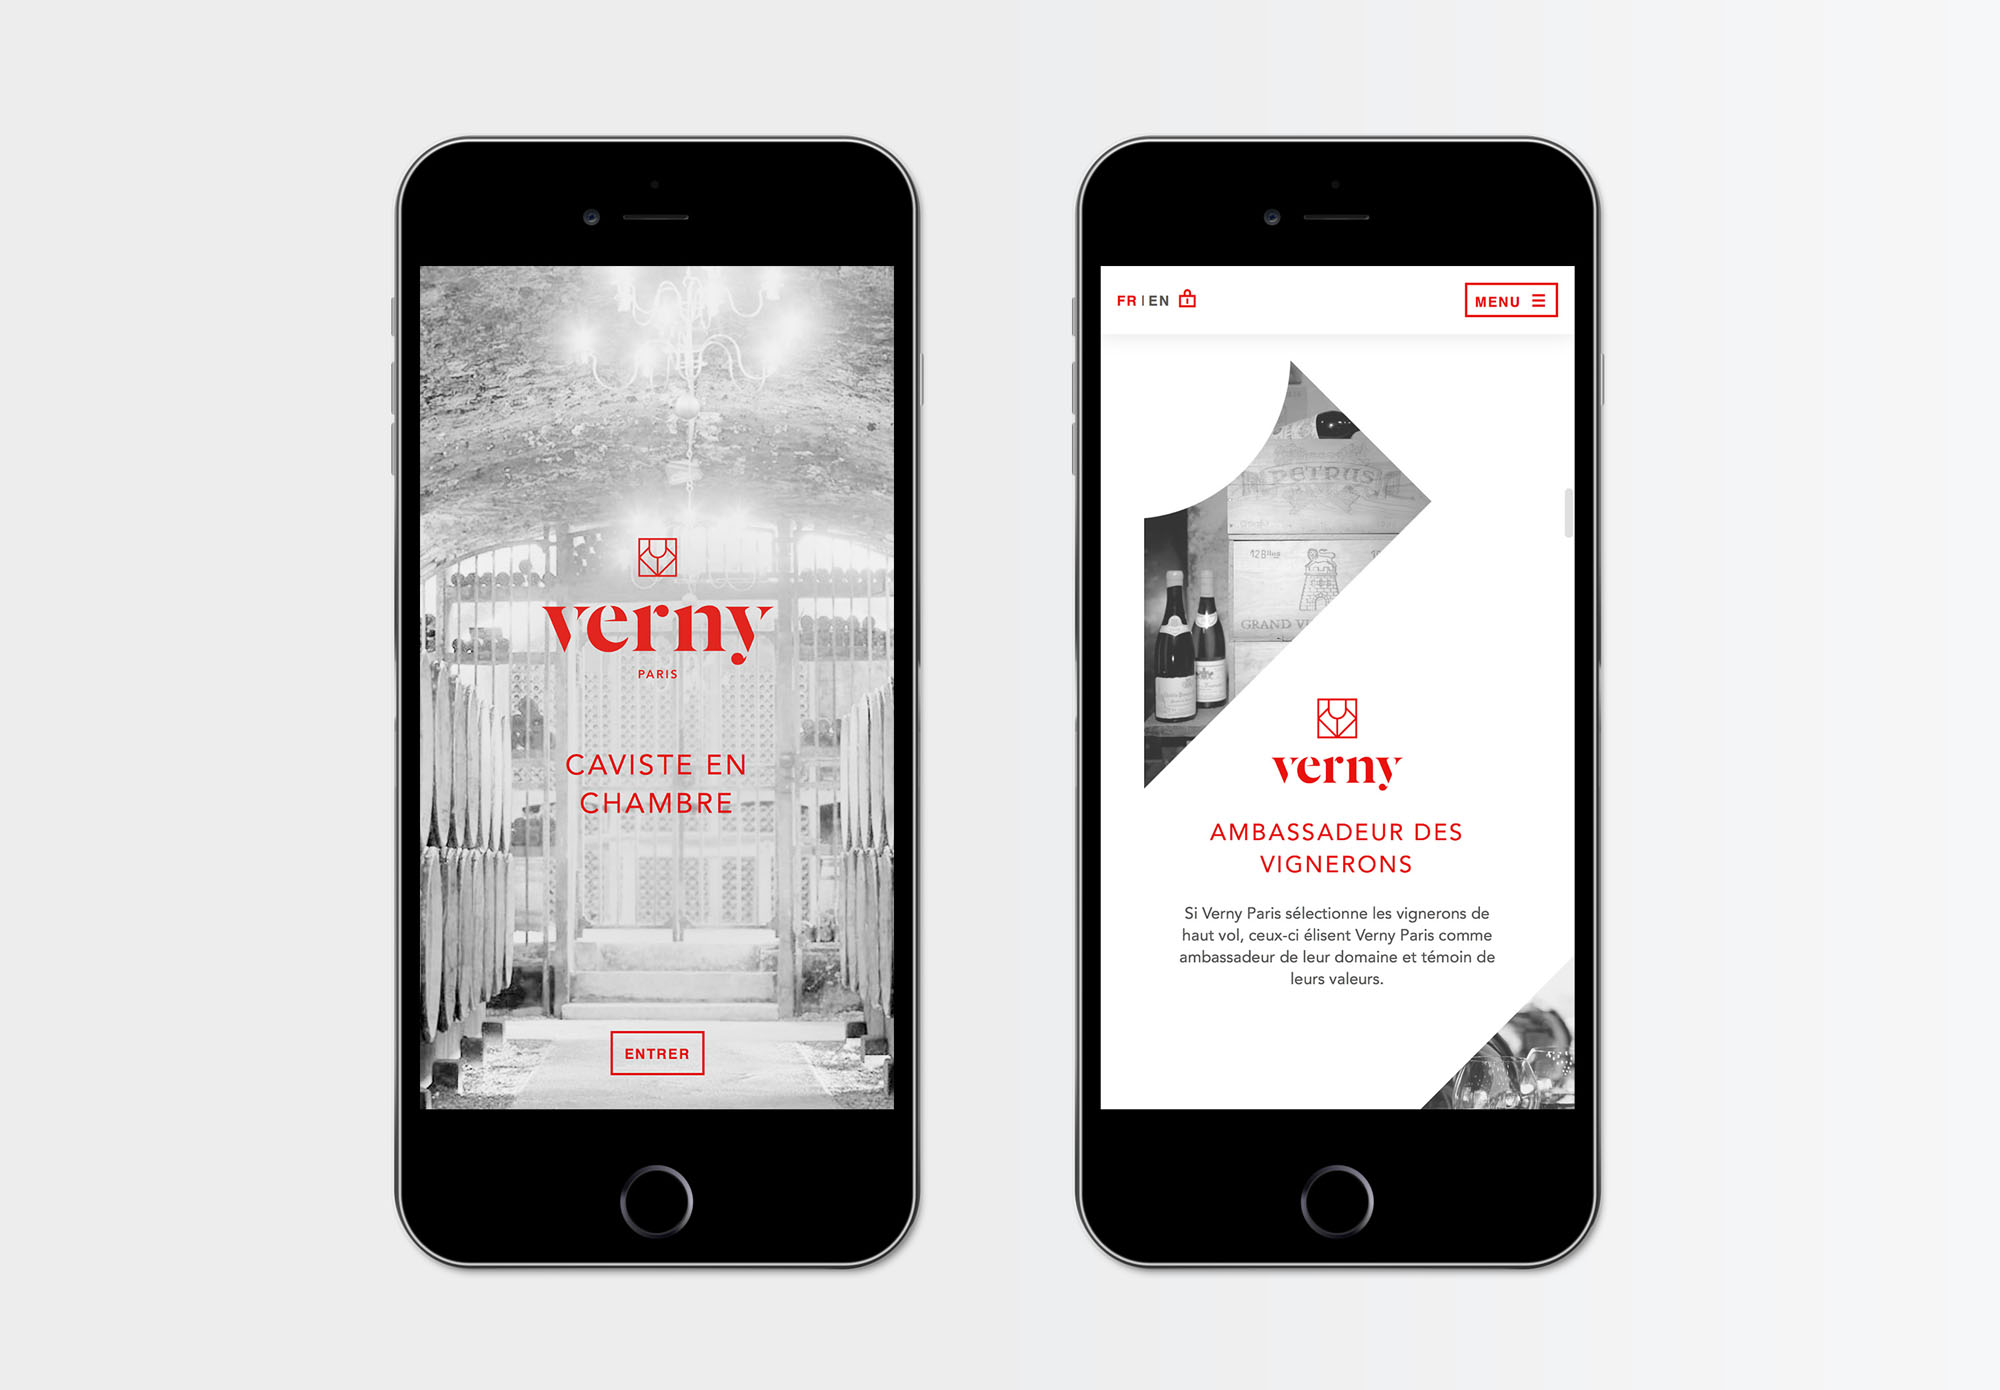 Verny Paris - site internet version iphone - caviste